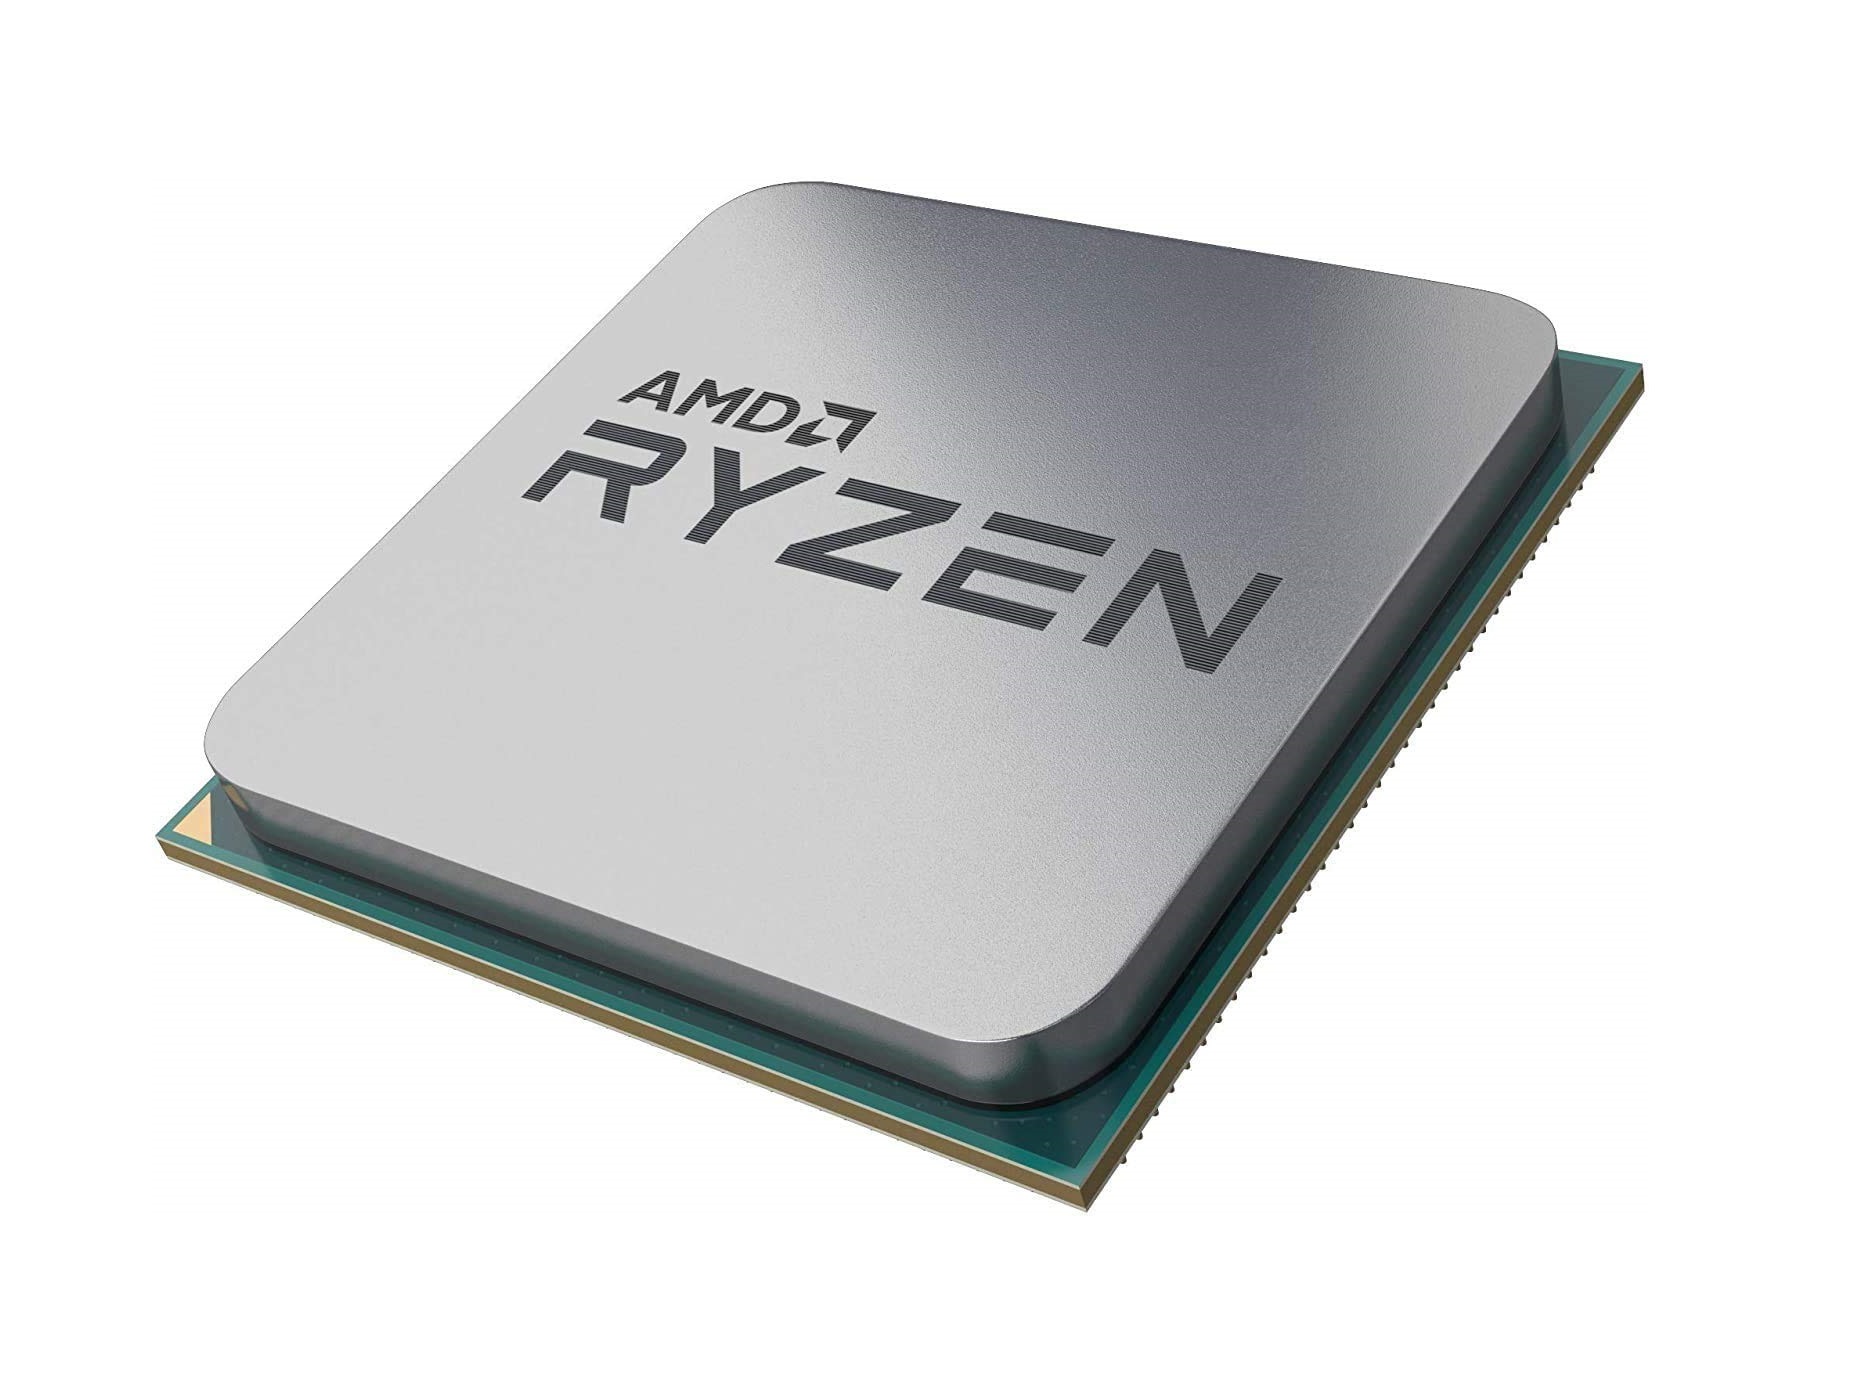 AMD Ryzen 5 3600, 3,6/4,2GHz, 6/12 C/T, AM4, 65 Watt, no Graphics, Tray